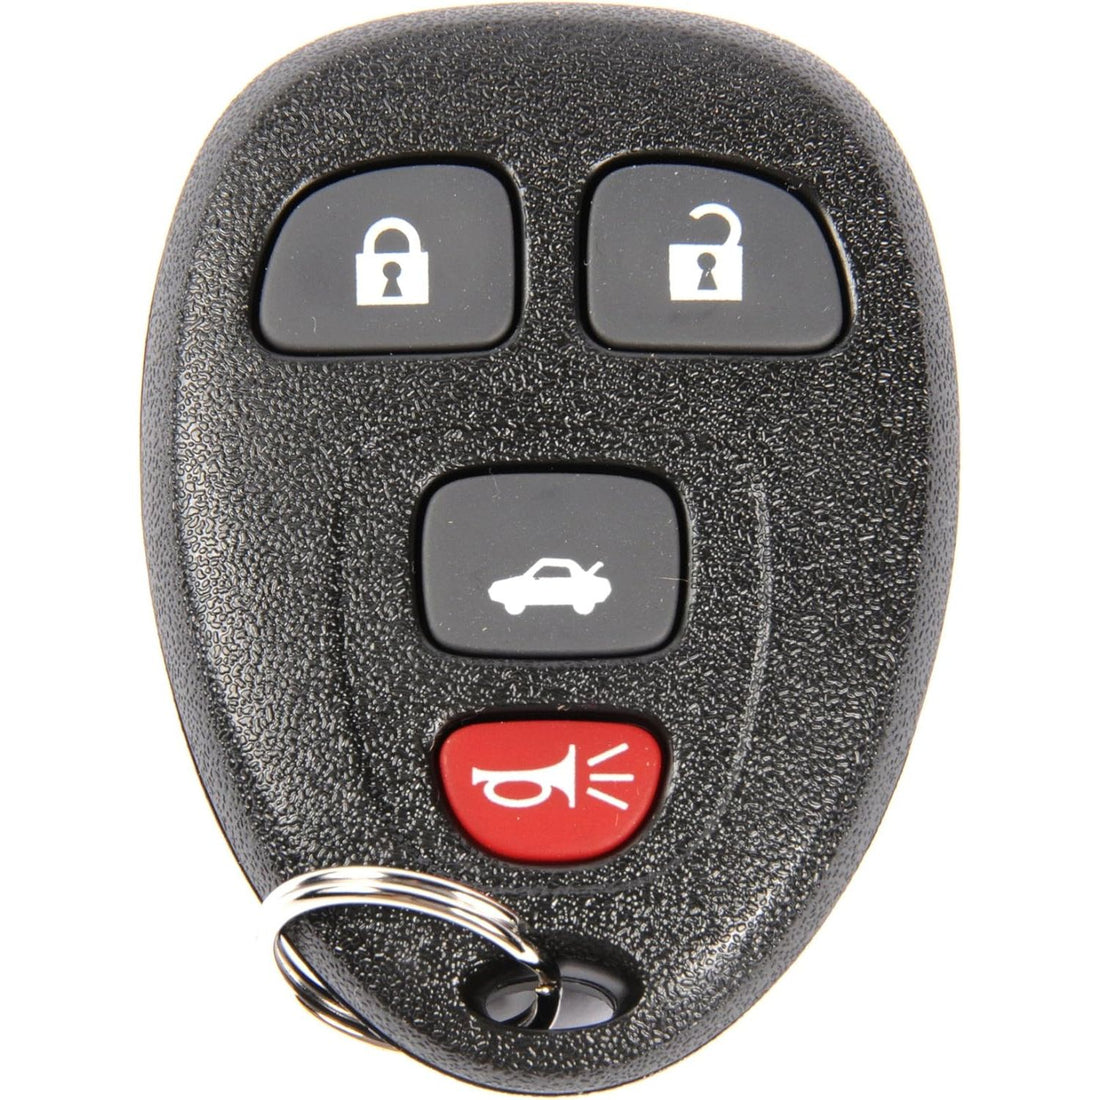 GM Genuine Parts 22733523 4 Button Keyless Entry Remote Key Fob